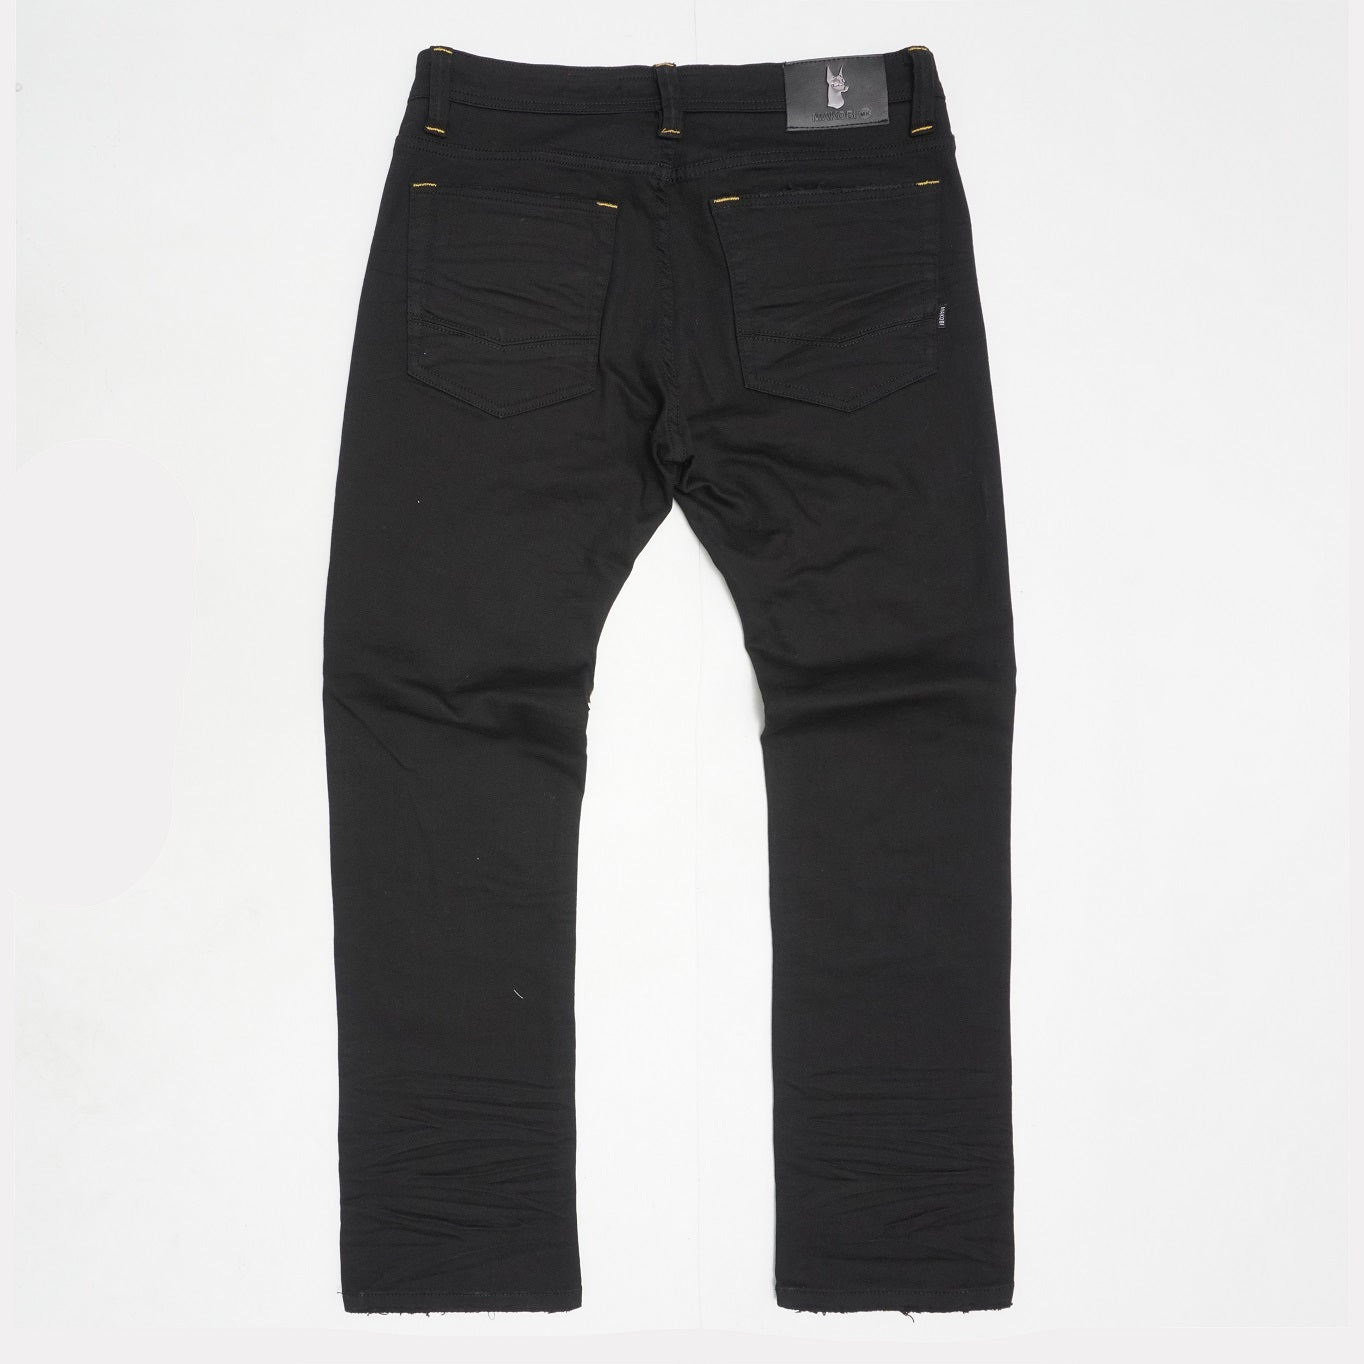 M1773 Makobi Amalfi Denim Jeans With Underlay - Black/Yellow